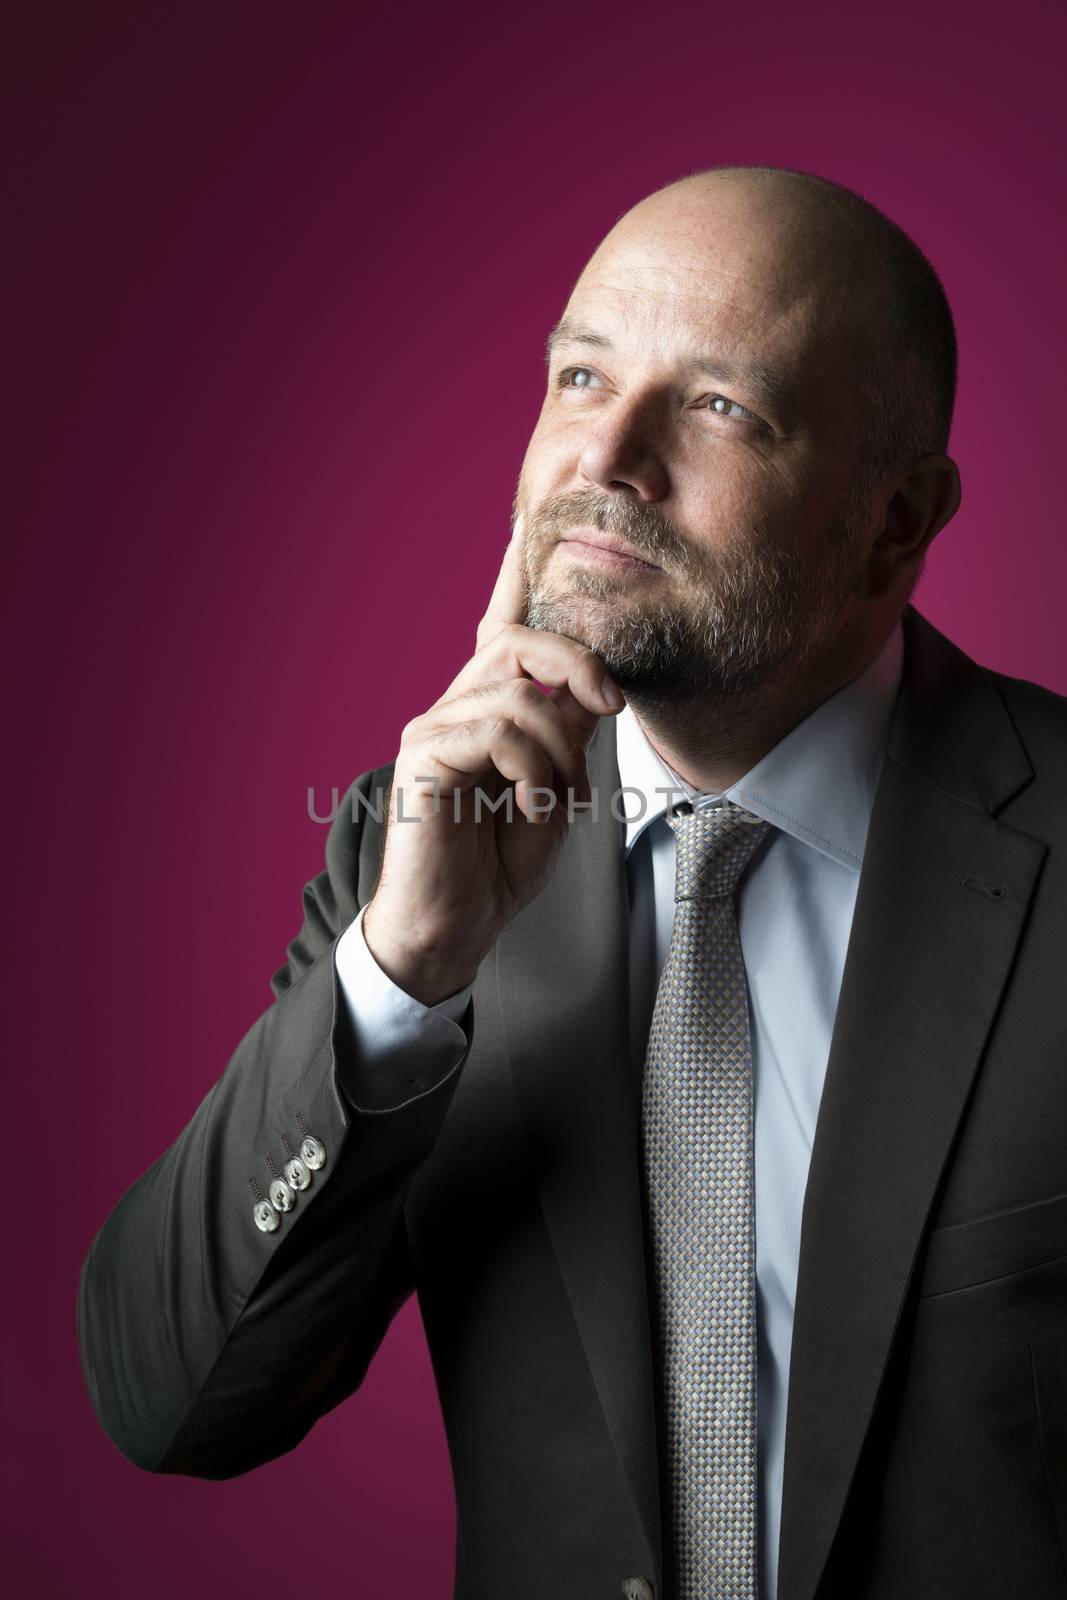 Reflective businessman in dark suit and tie against magenta background